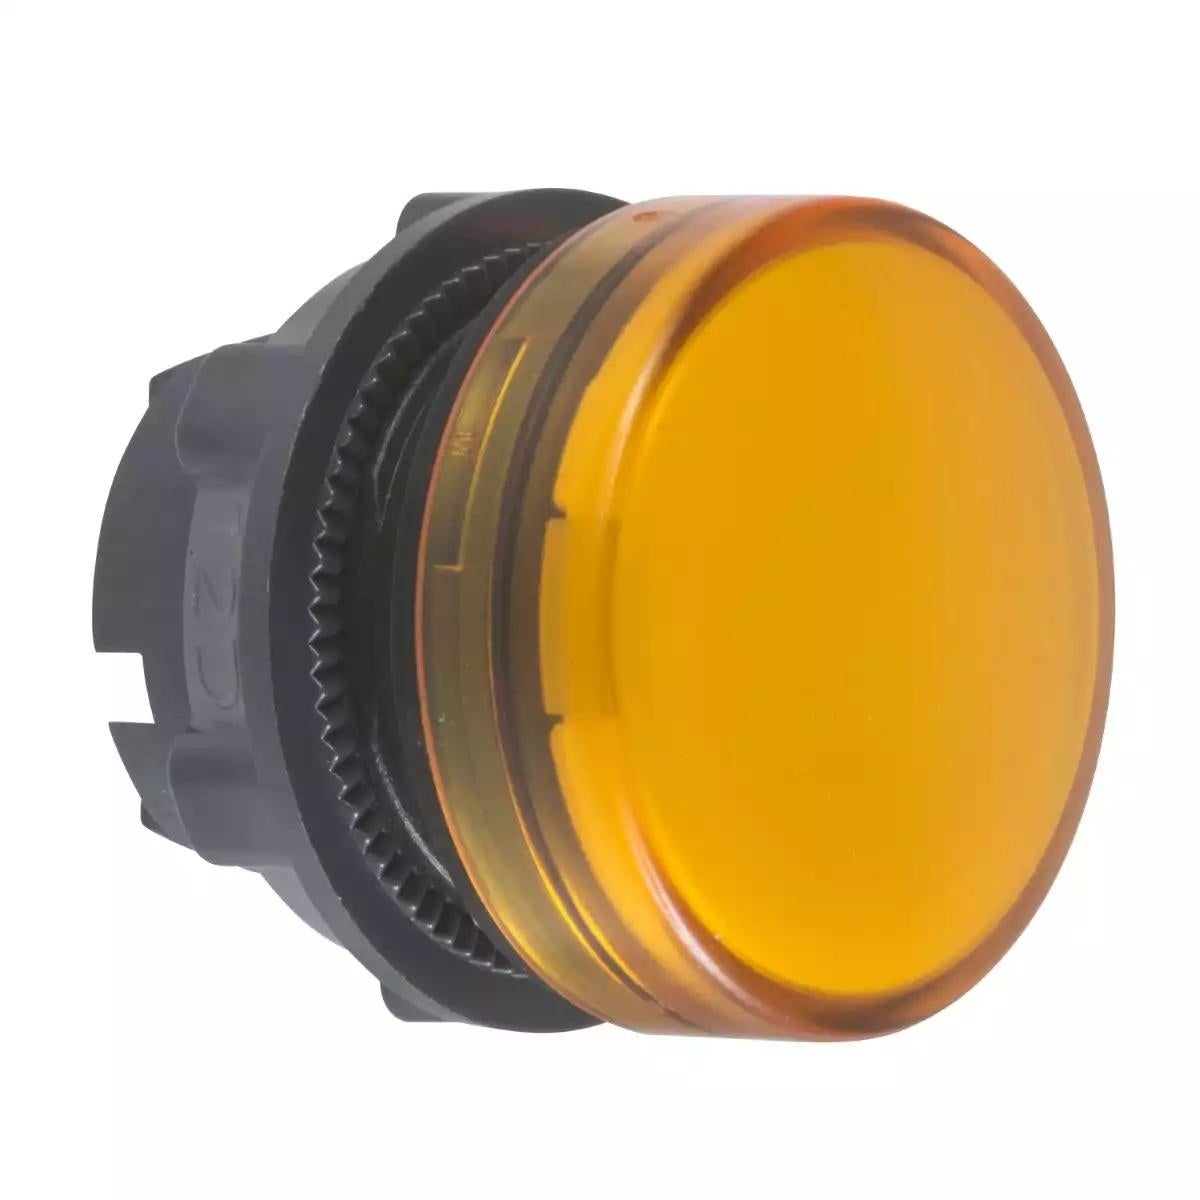 Pilot light head, Harmony XB5, metal, orange, 22mm, plain lens for BA9s bulb